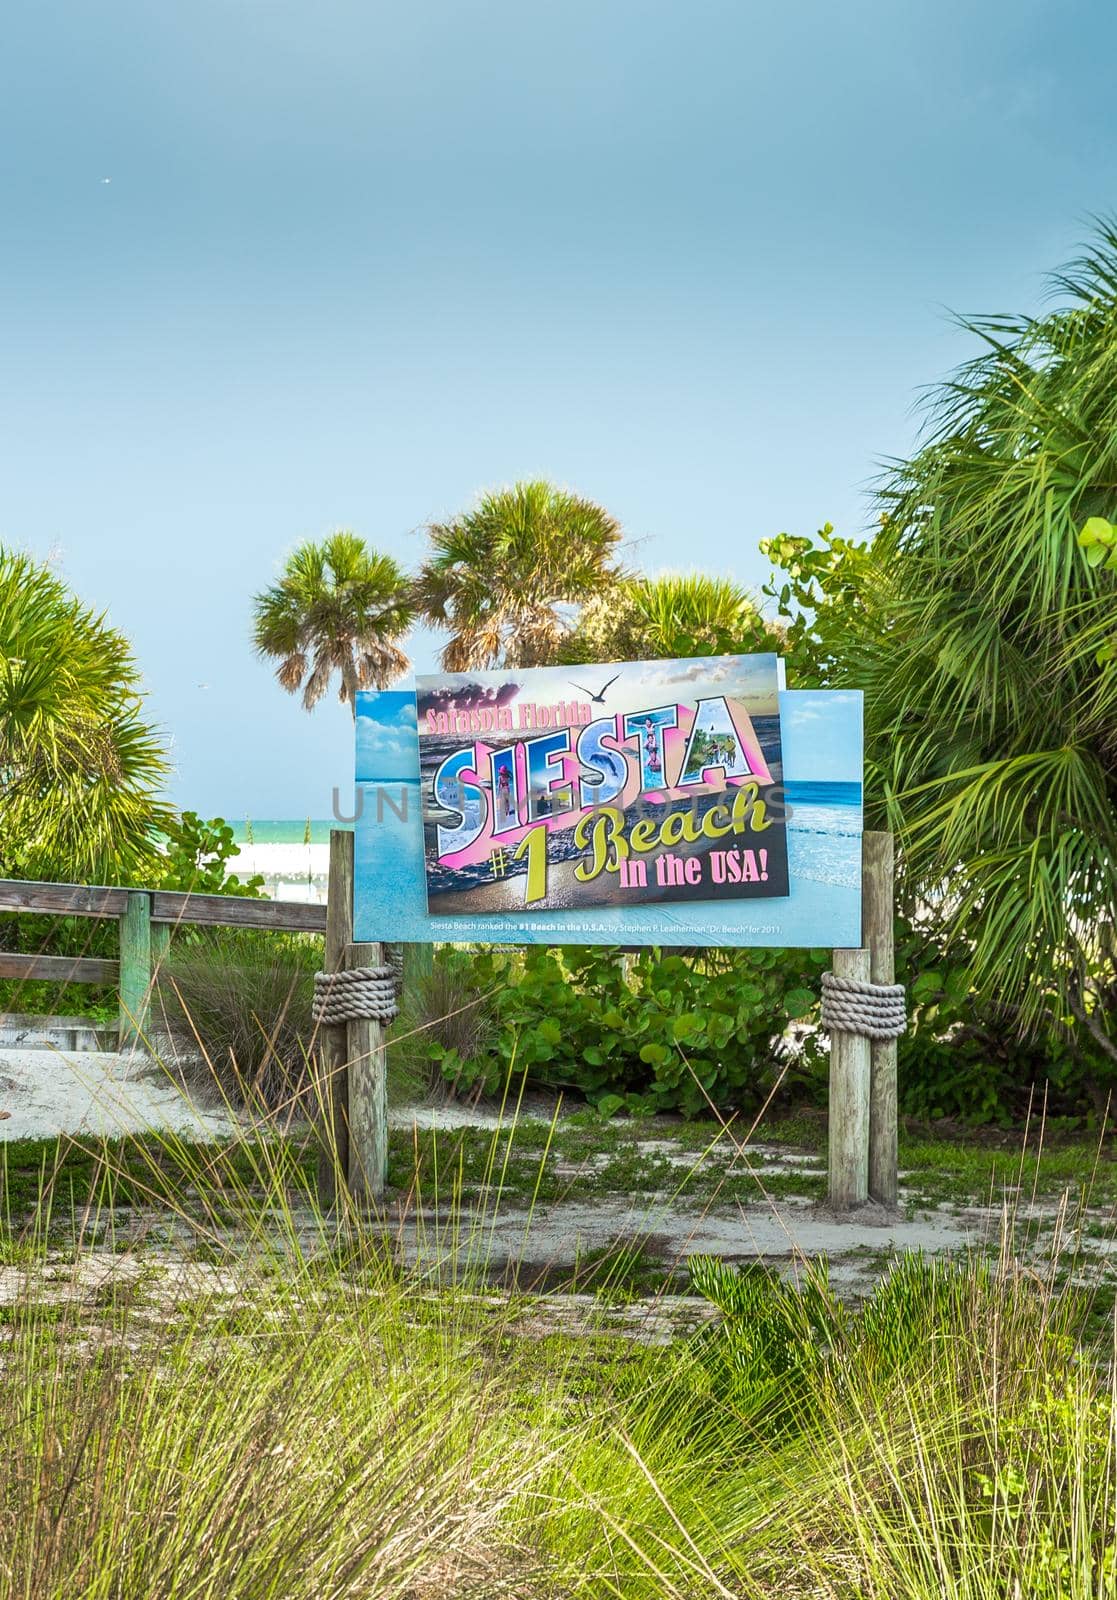 SARASOTA, USA - SEPTEMBER 04: Siesta Beach entry sign on September 04, 2014 In Sarasota, USA.